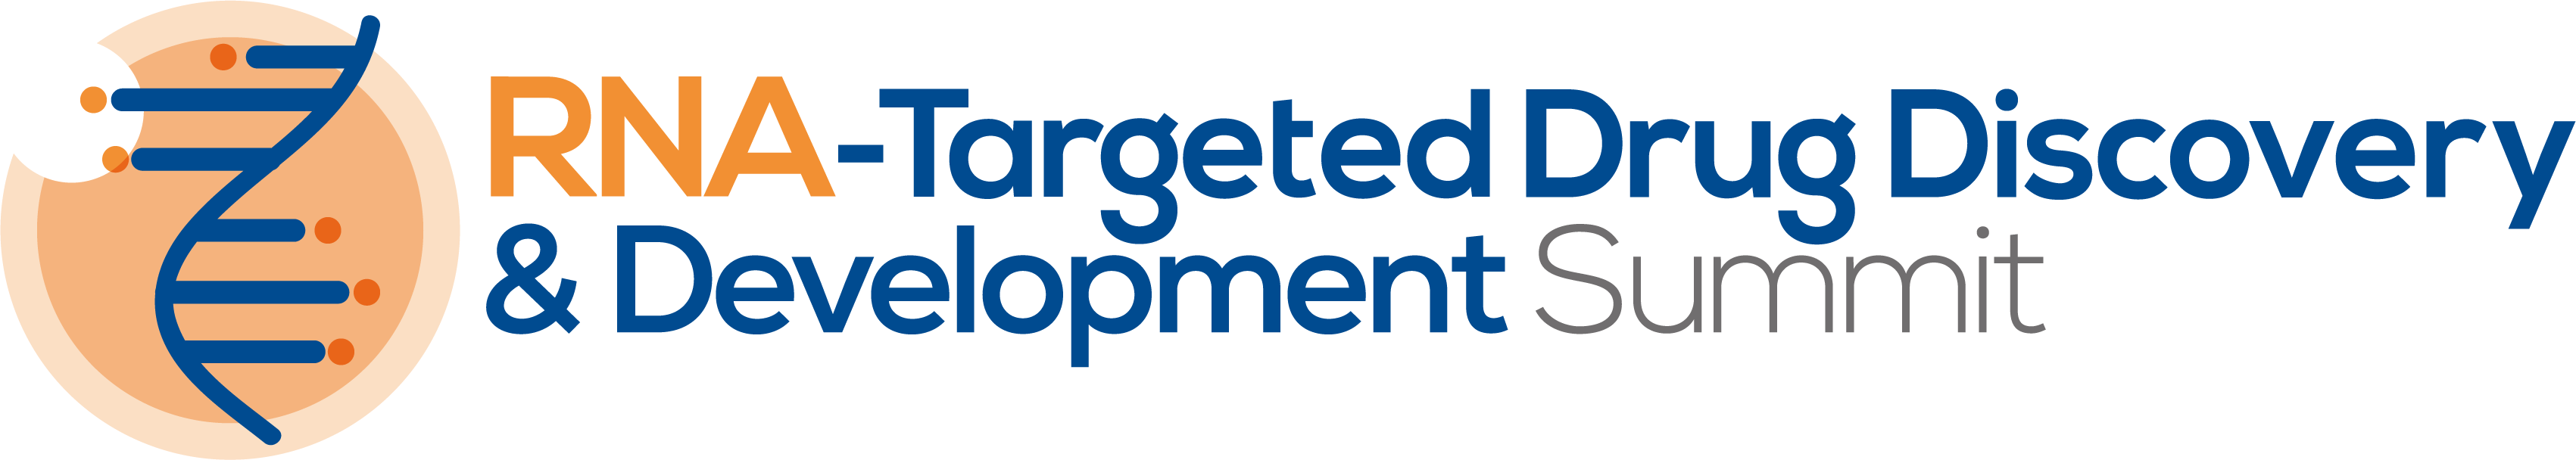 RNA-Targeted Drug Discovery & Development Summit Logo